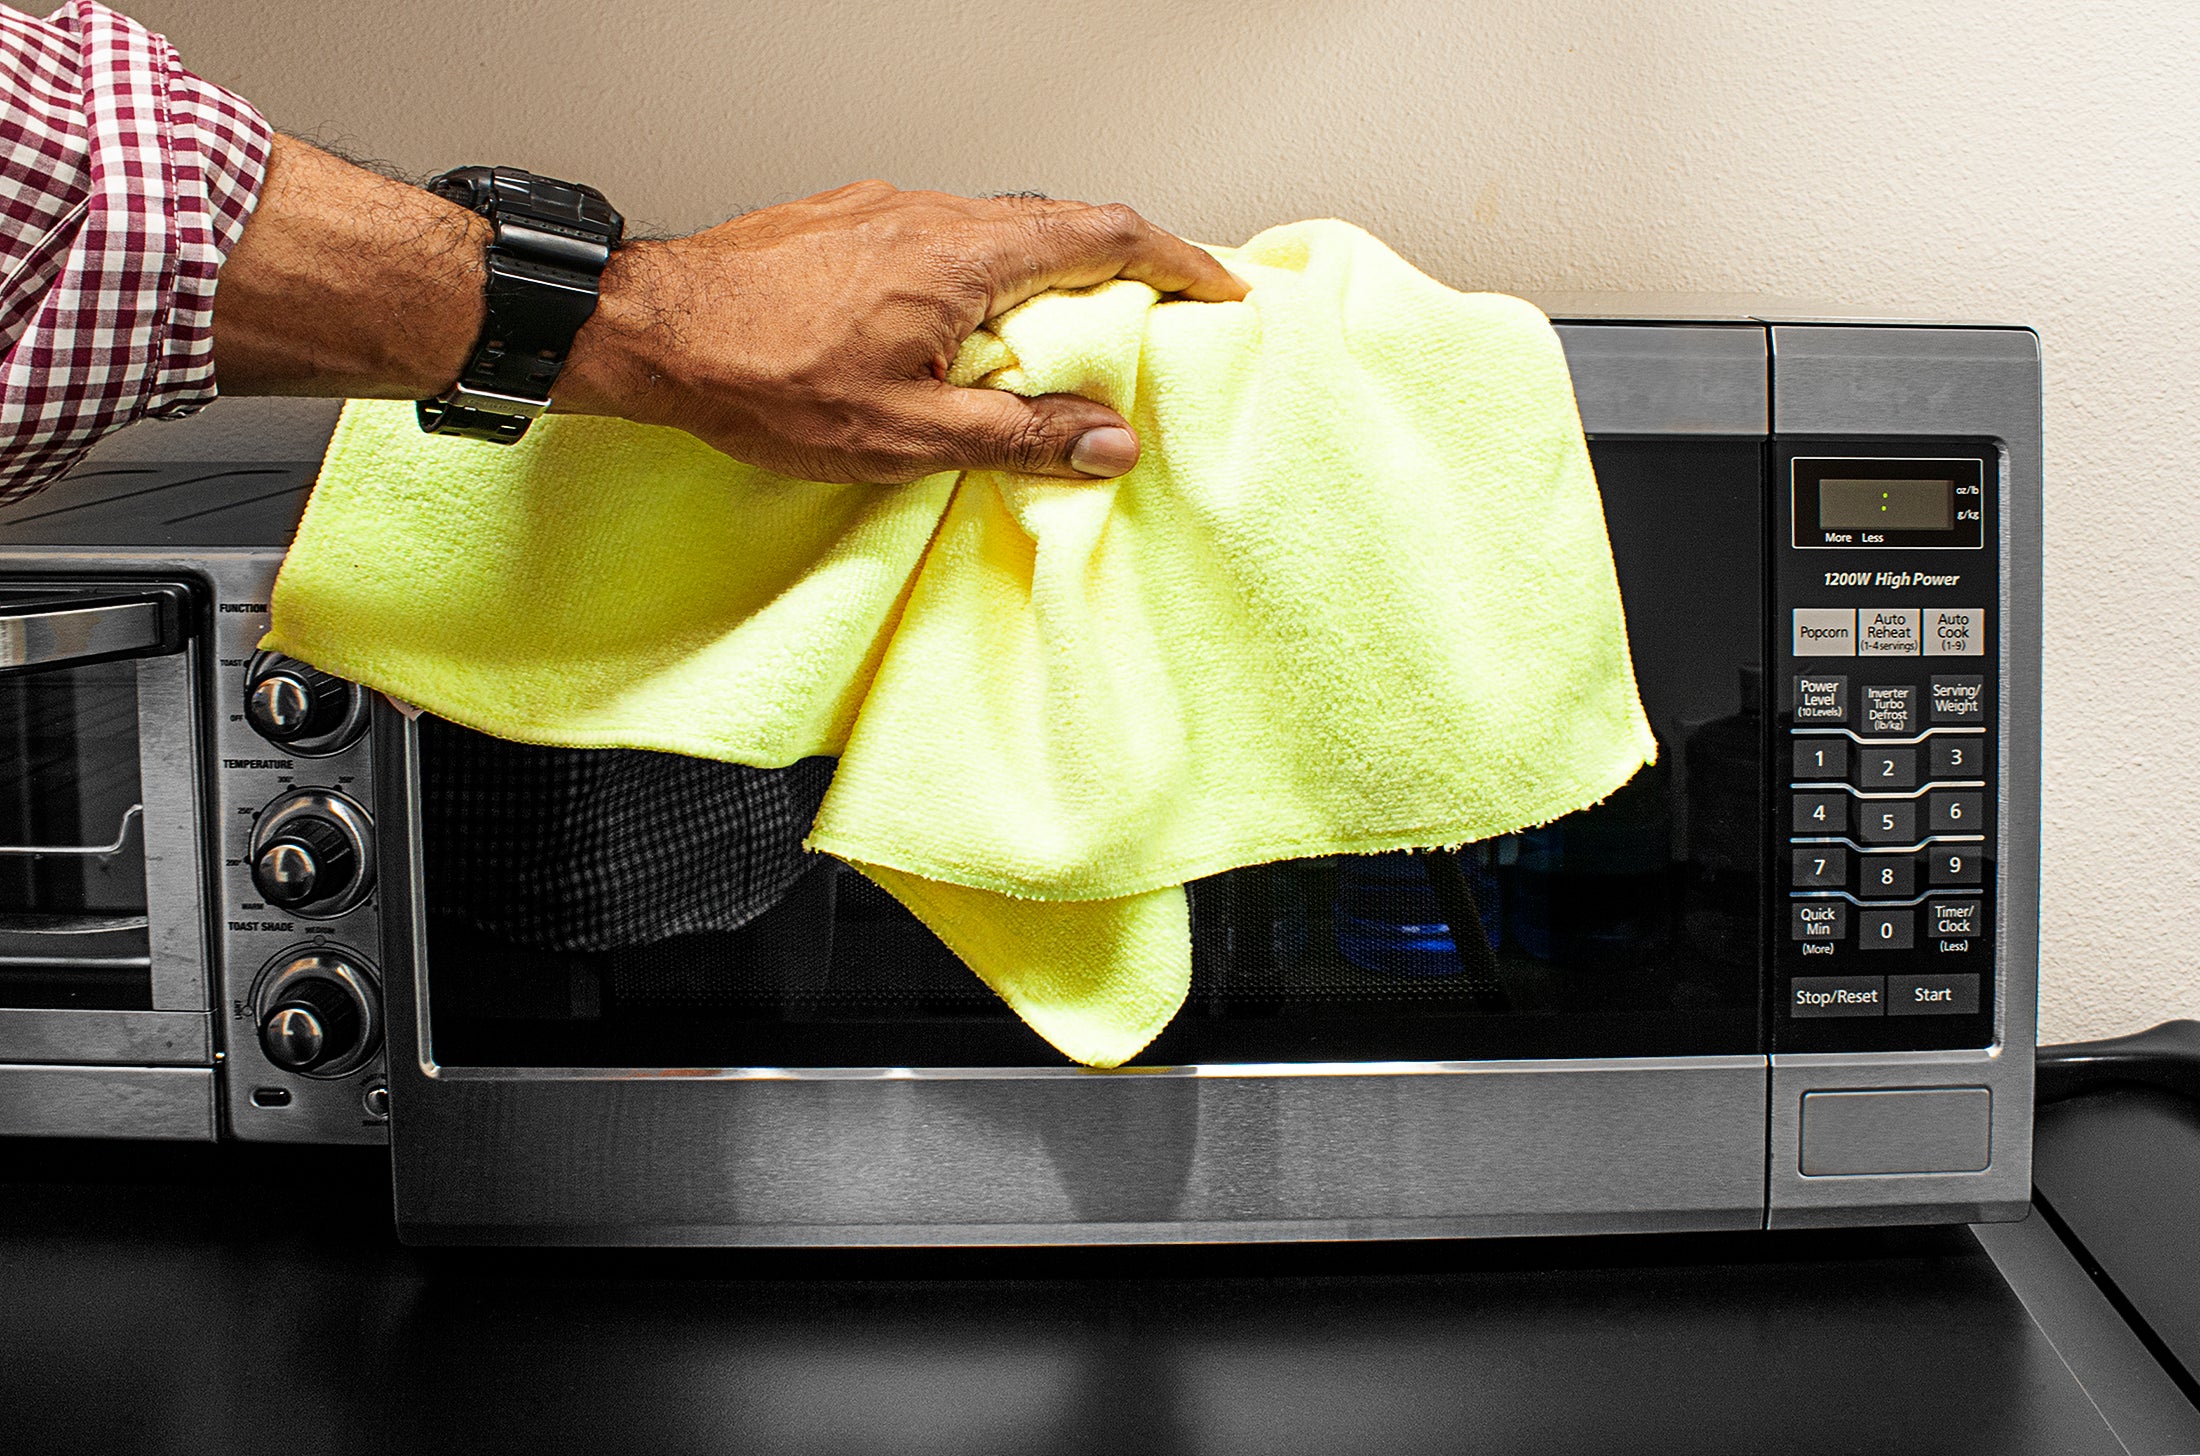 Detailer's Preference® Black Microfiber Cleaning Cloths – 50-pack